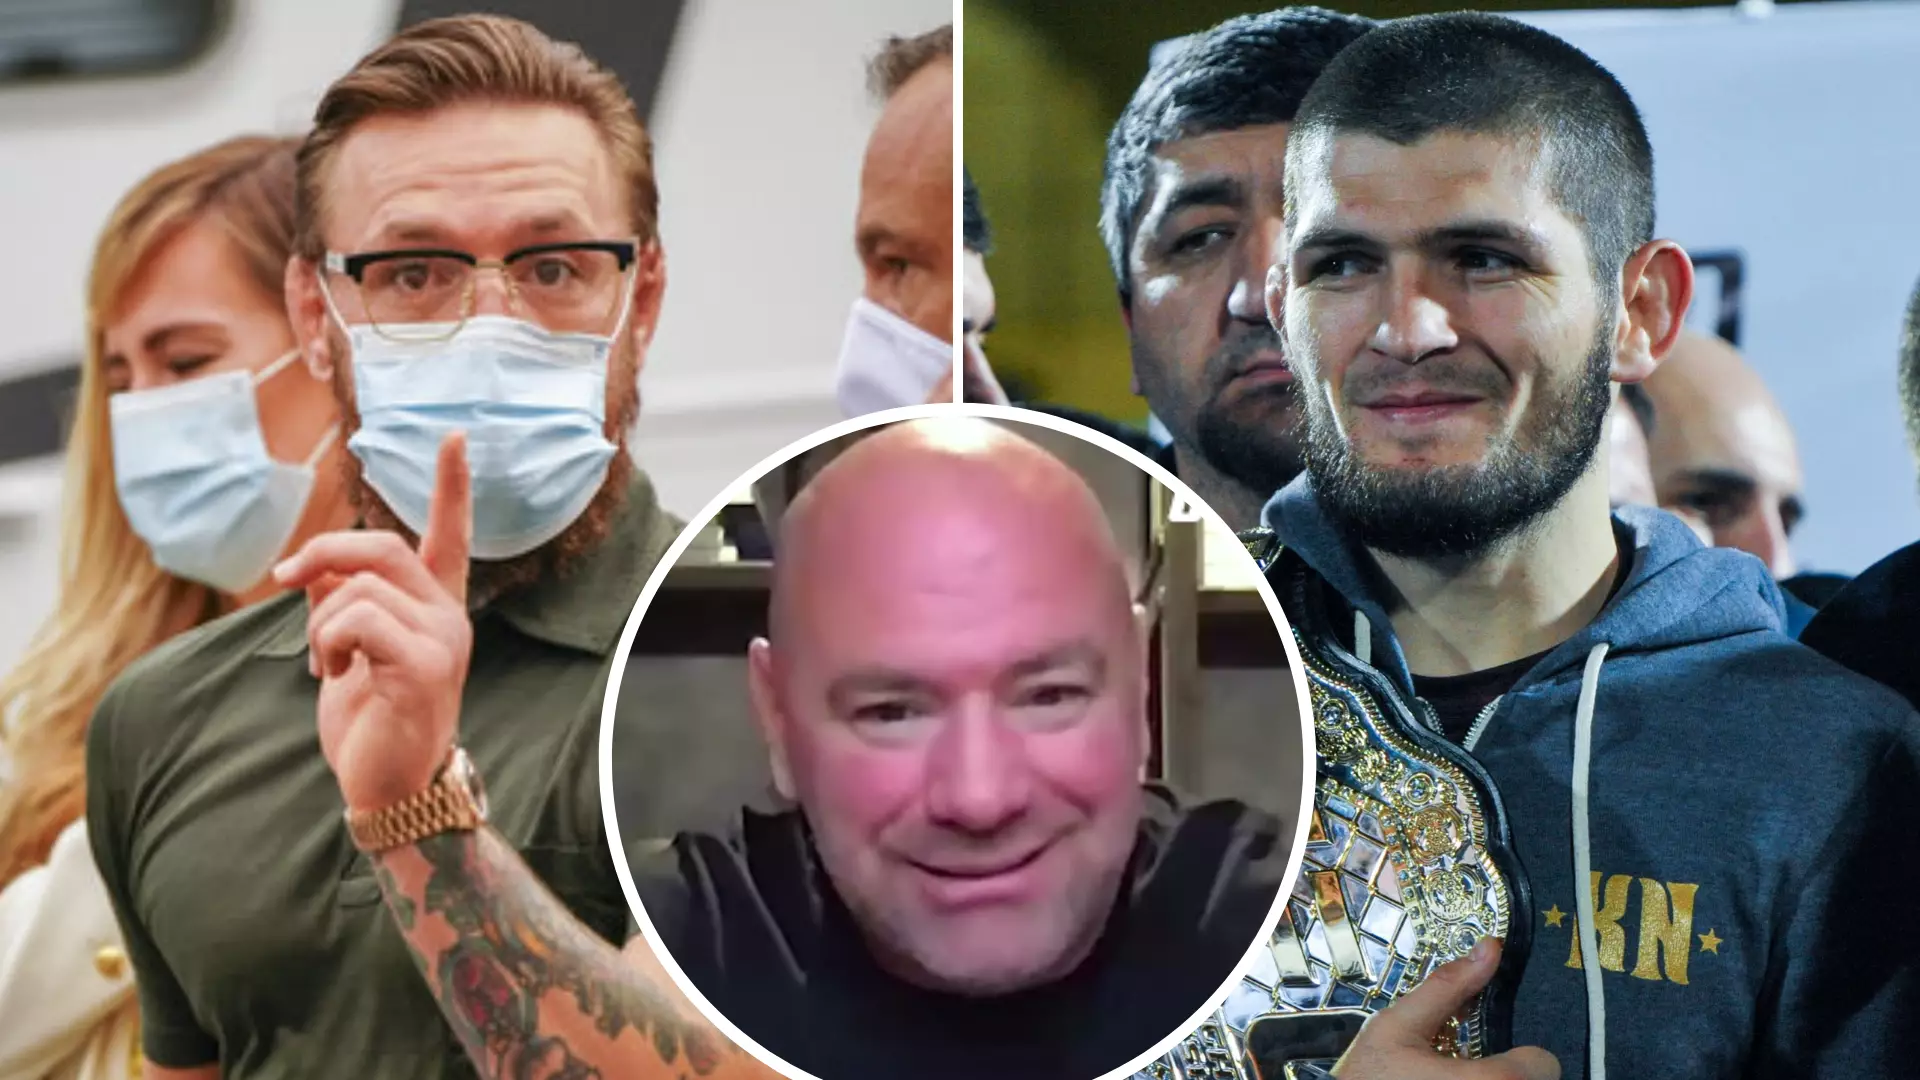 Dana White Shares True Feelings On Conor McGregor's Performance Against Khabib Nurmagomedov